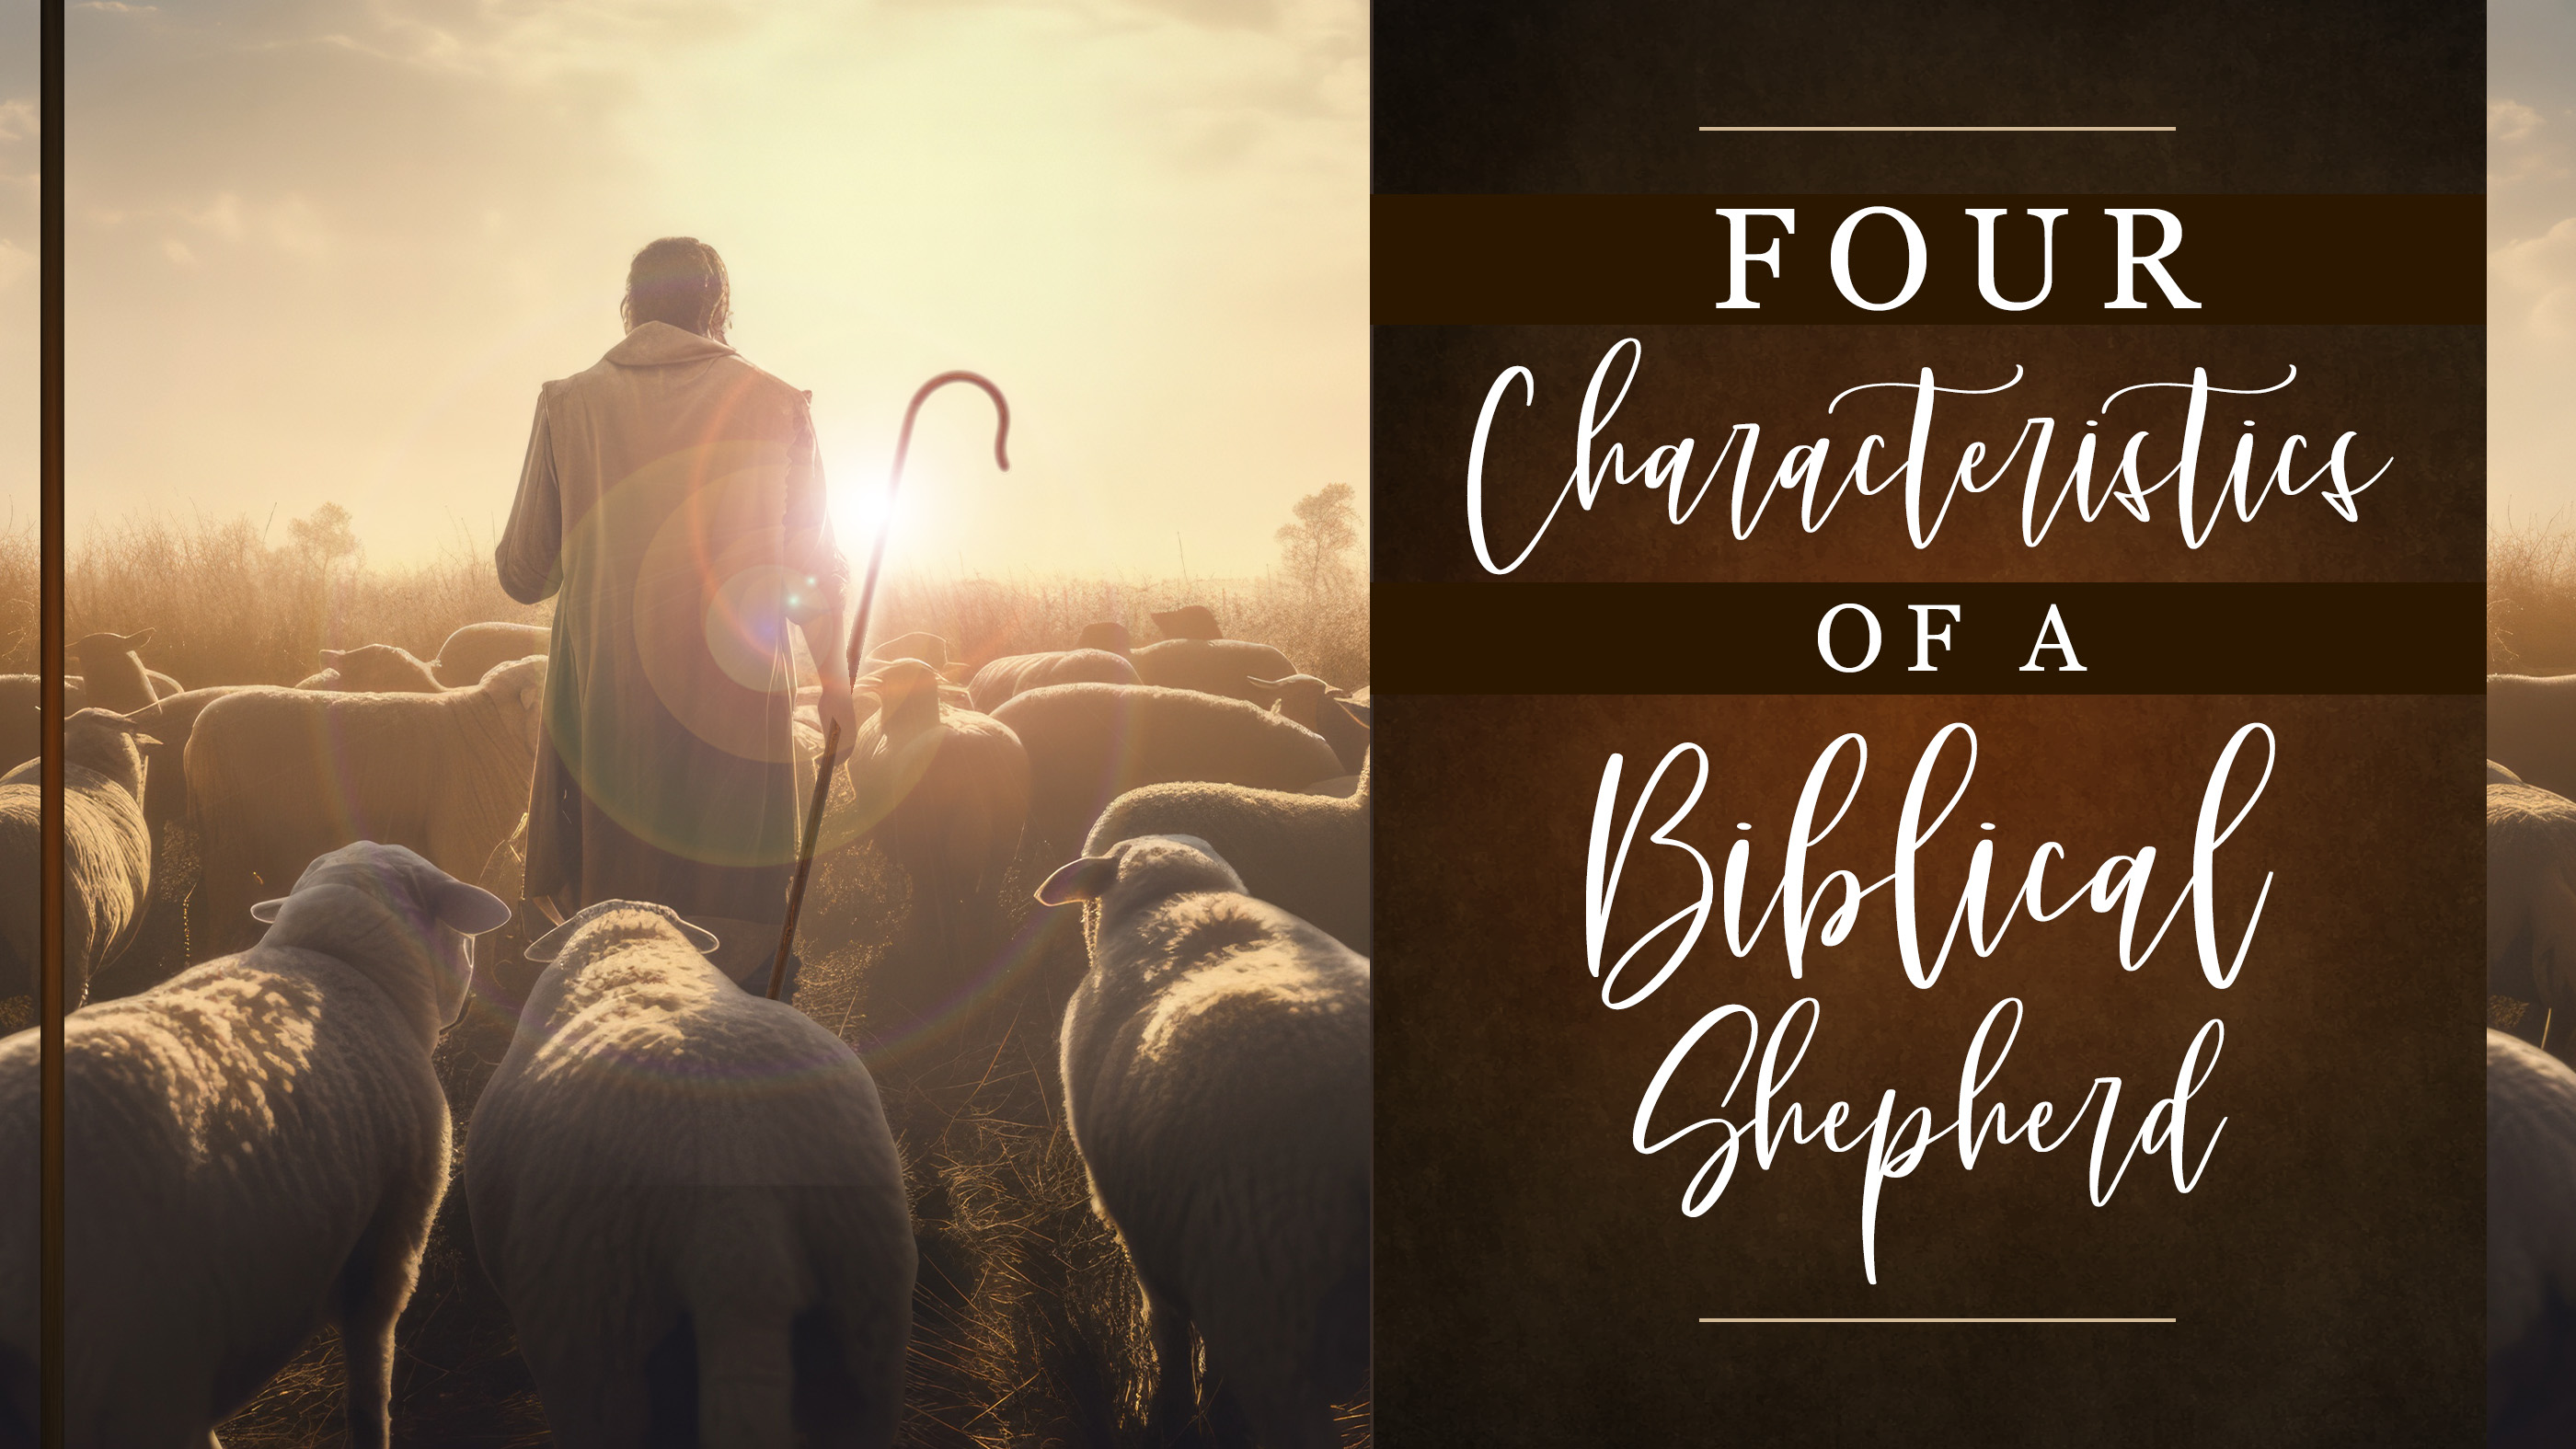 Four Characteristics of a Biblical Shepherd